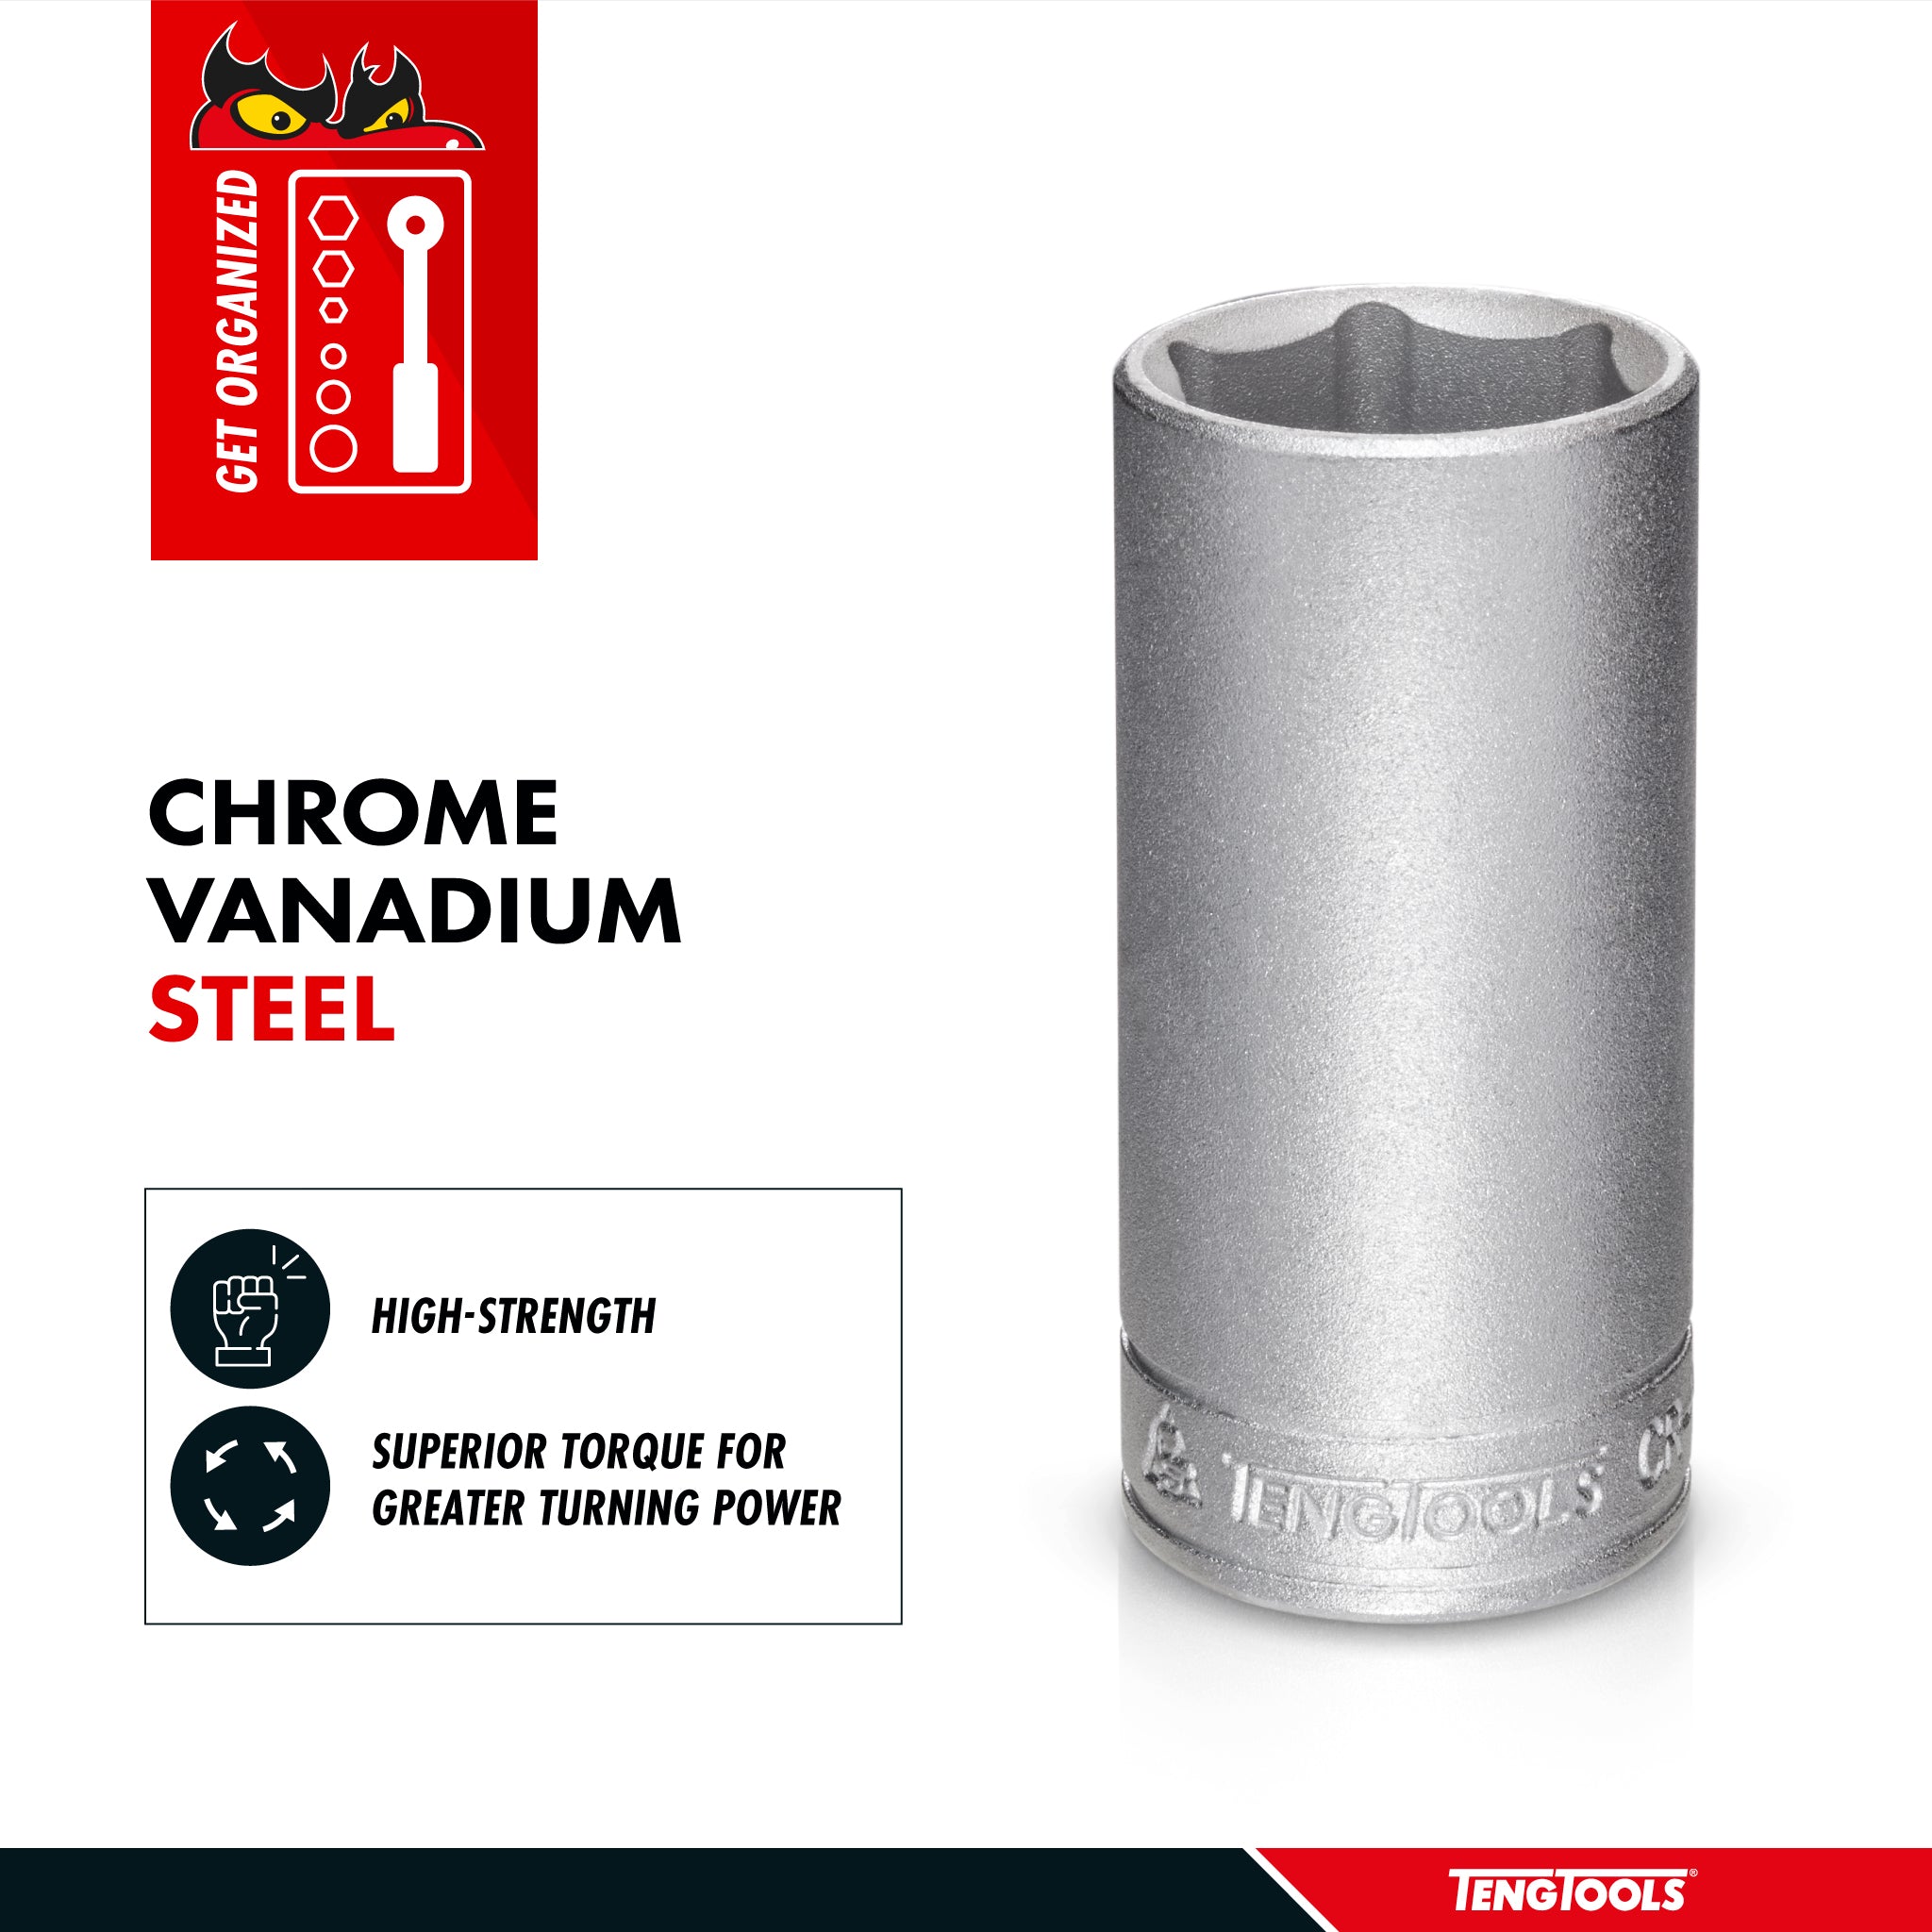 Teng Tools 1/4 Inch Drive 6 Point Metric Deep Chrome Vanadium Sockets - 6mm